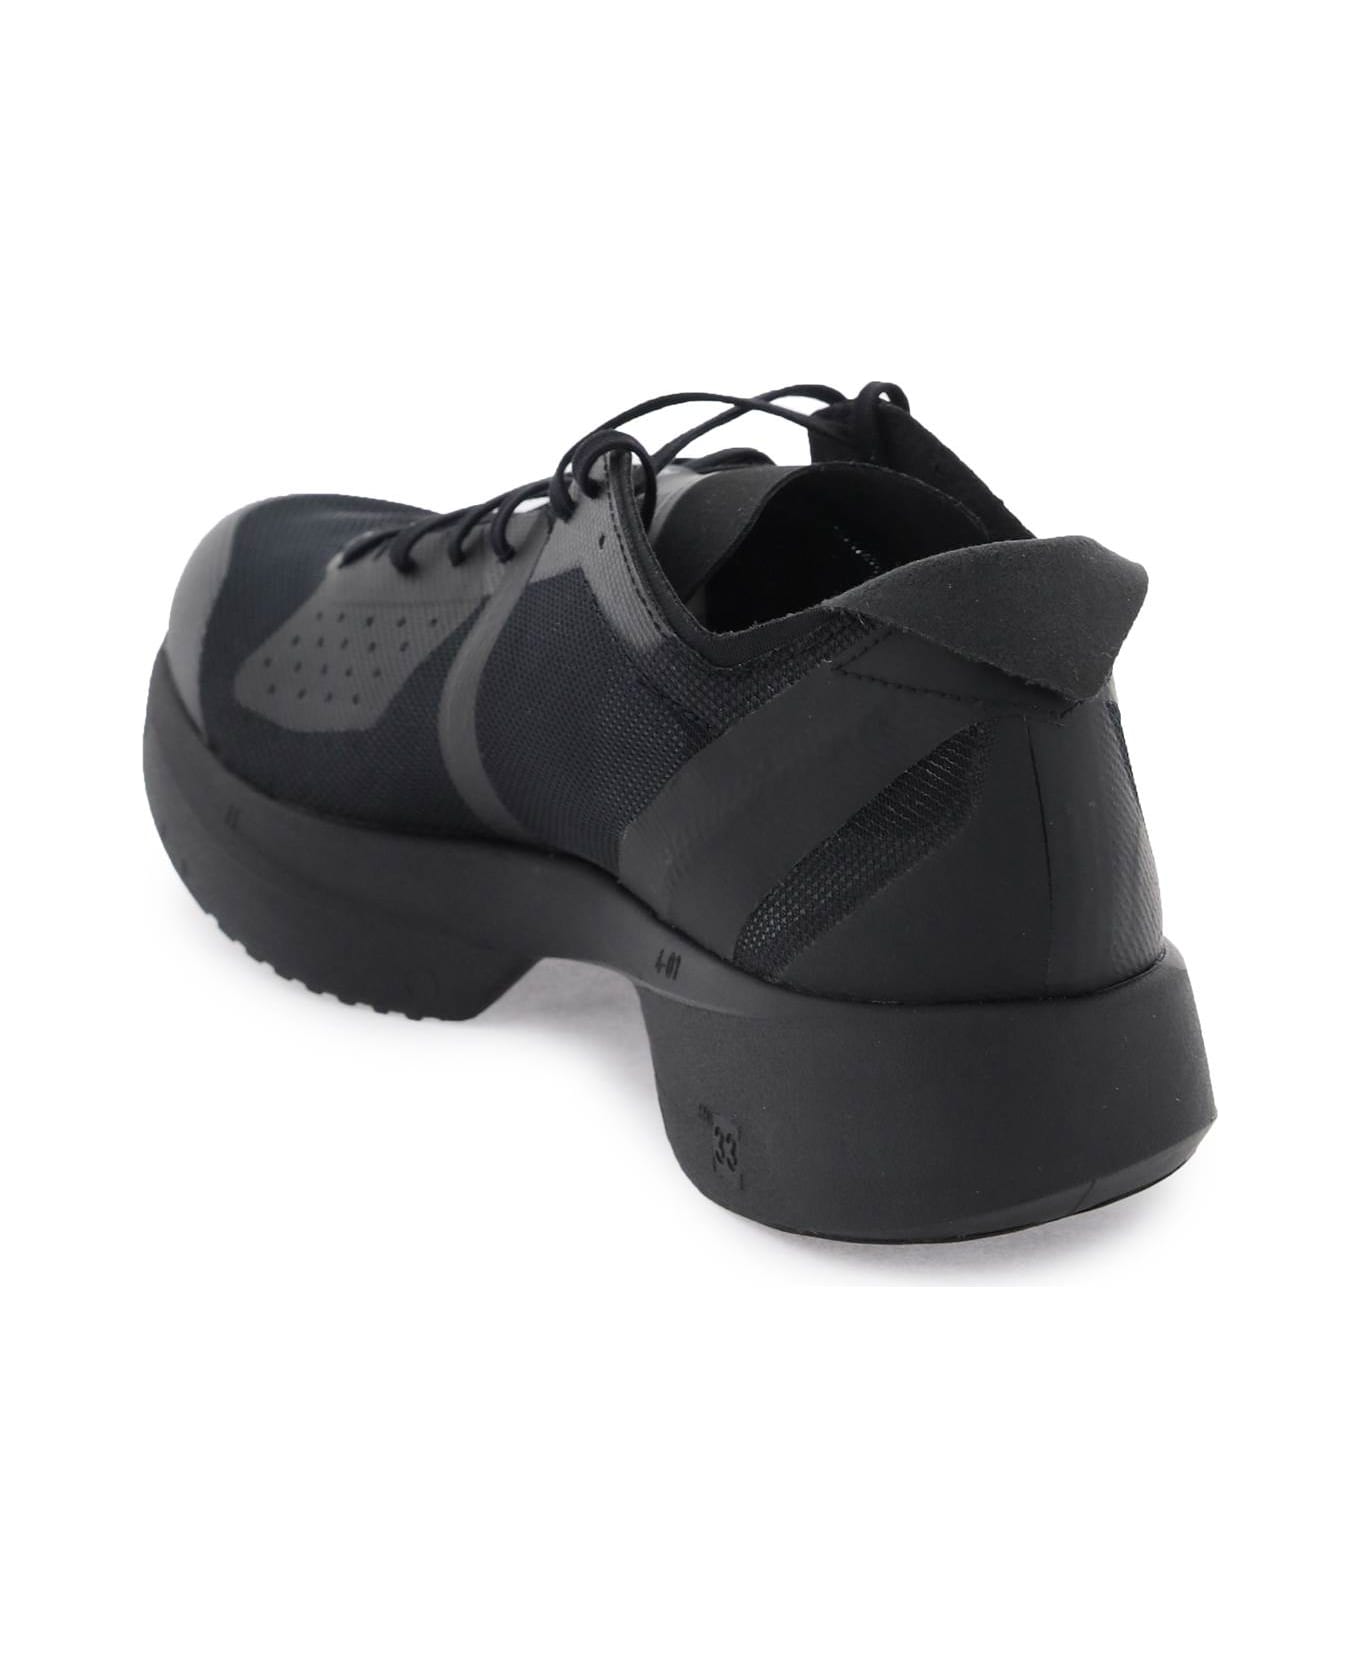 Y-3 'takumi Sen 9' Sneakers - Black Black Multi